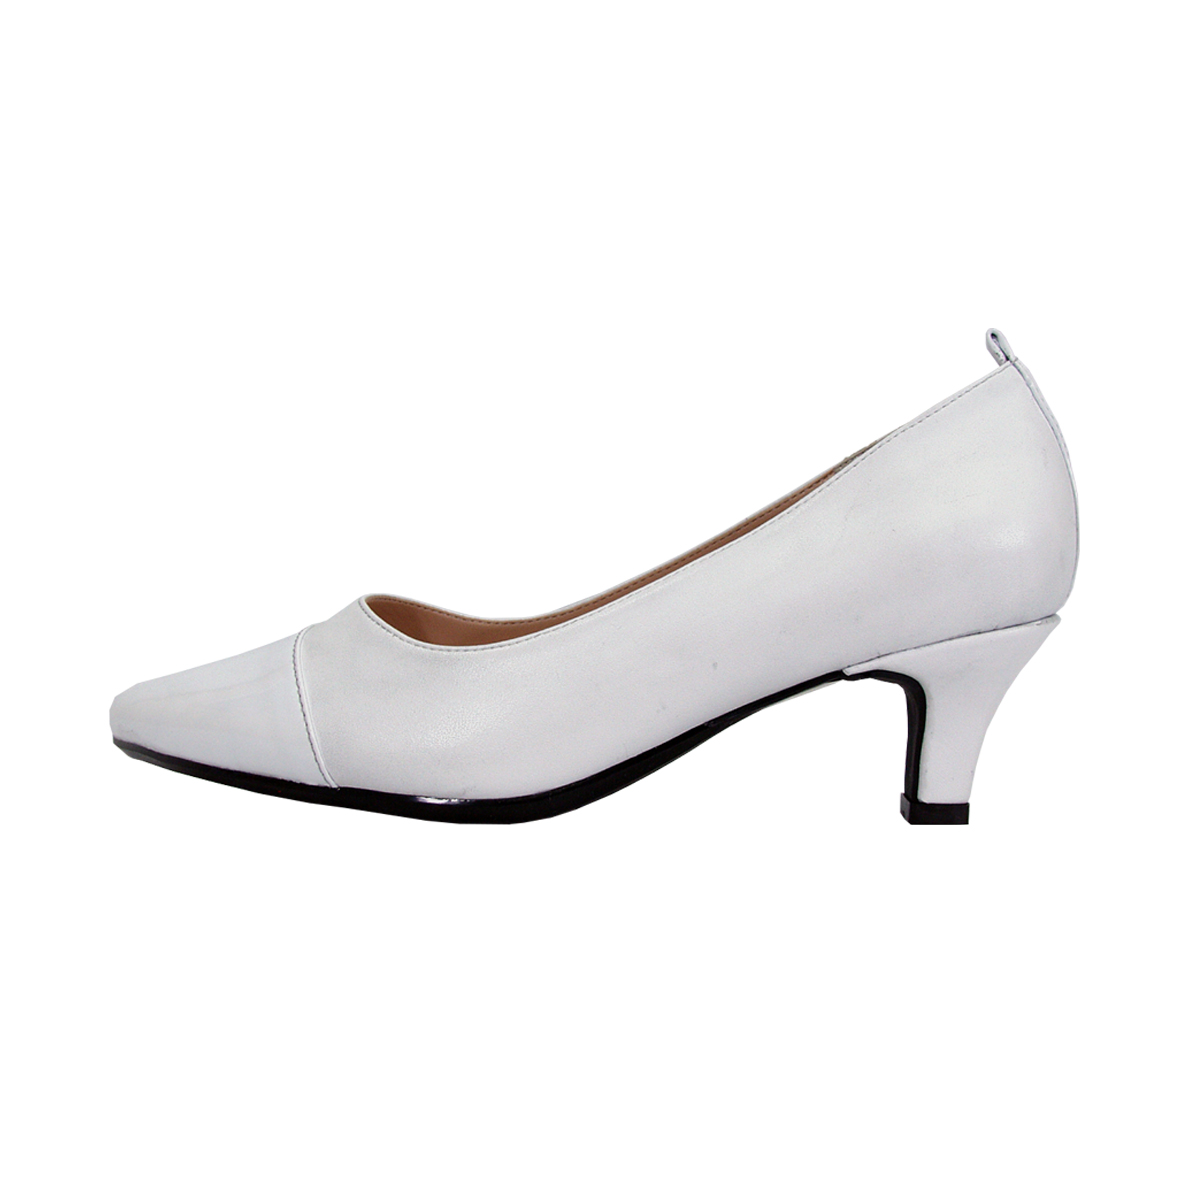 PEERAGE Arlene Women's Wide Width Casual Comfort Mid Heel Dress Shoes for Wedding, Prom, Evening, Work WHITE 8.5 - image 3 of 6